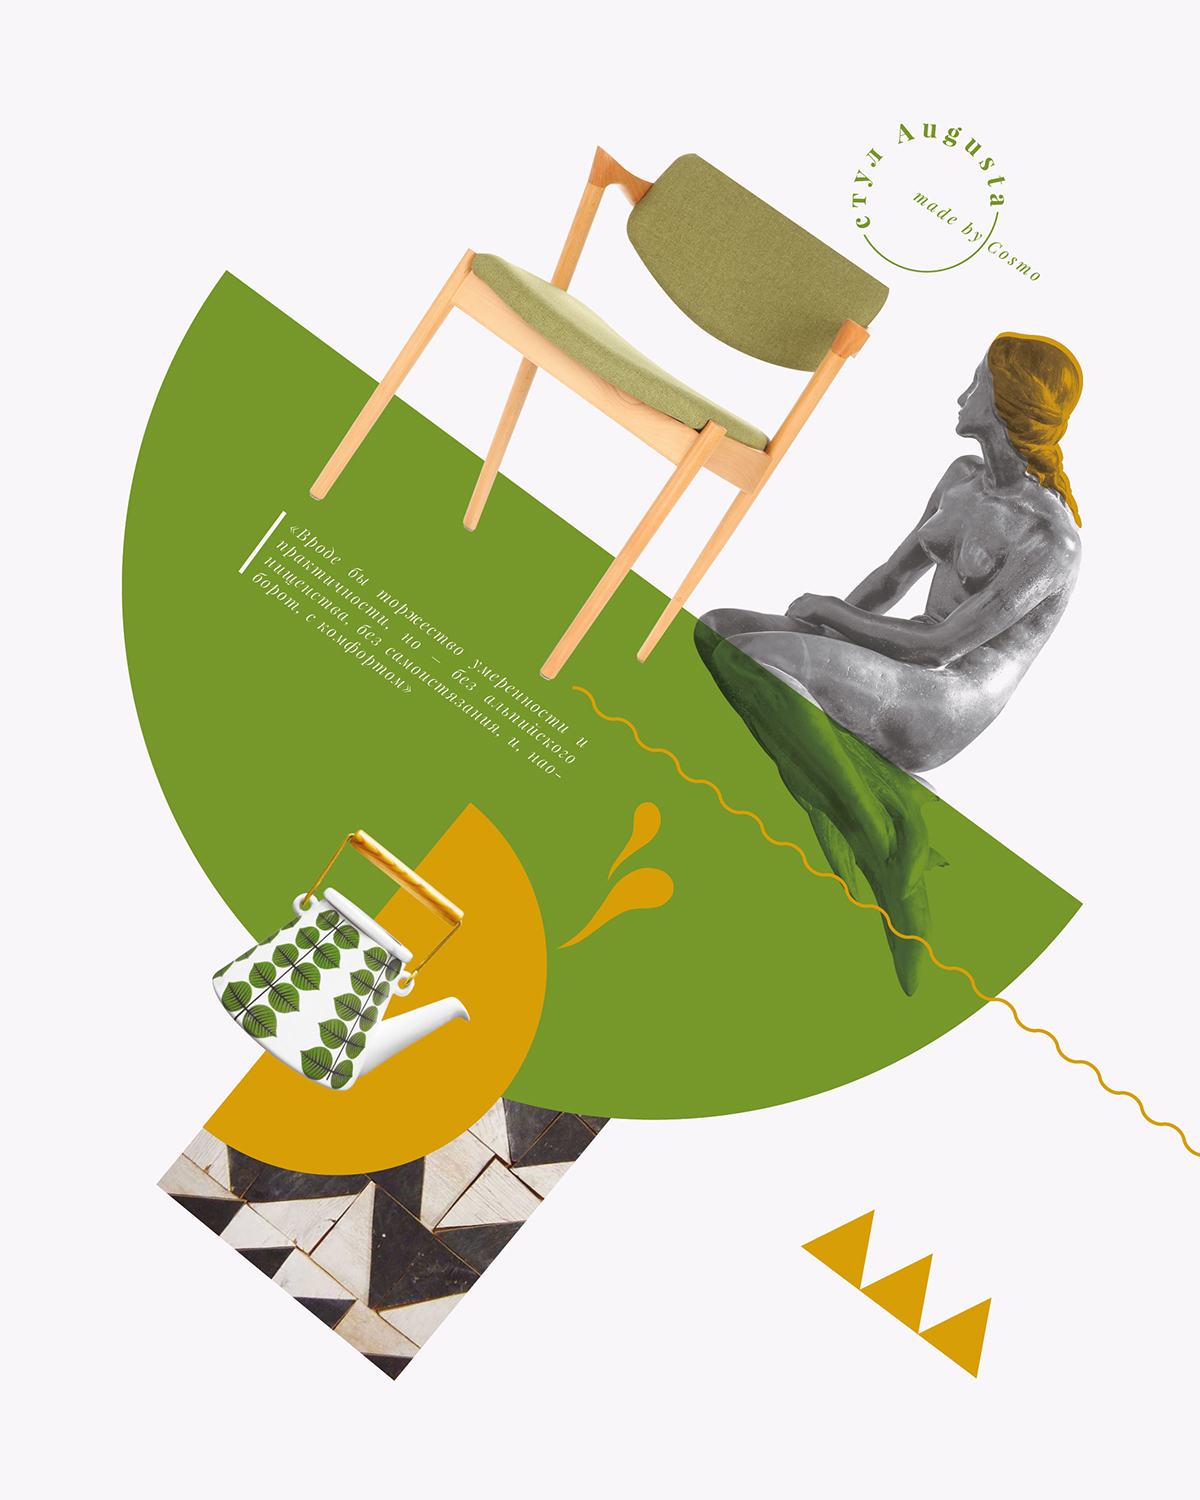 Cosmorelax furniture collage ILLUSTRATION  Альпина Паблишер alpinabook design book illustration art